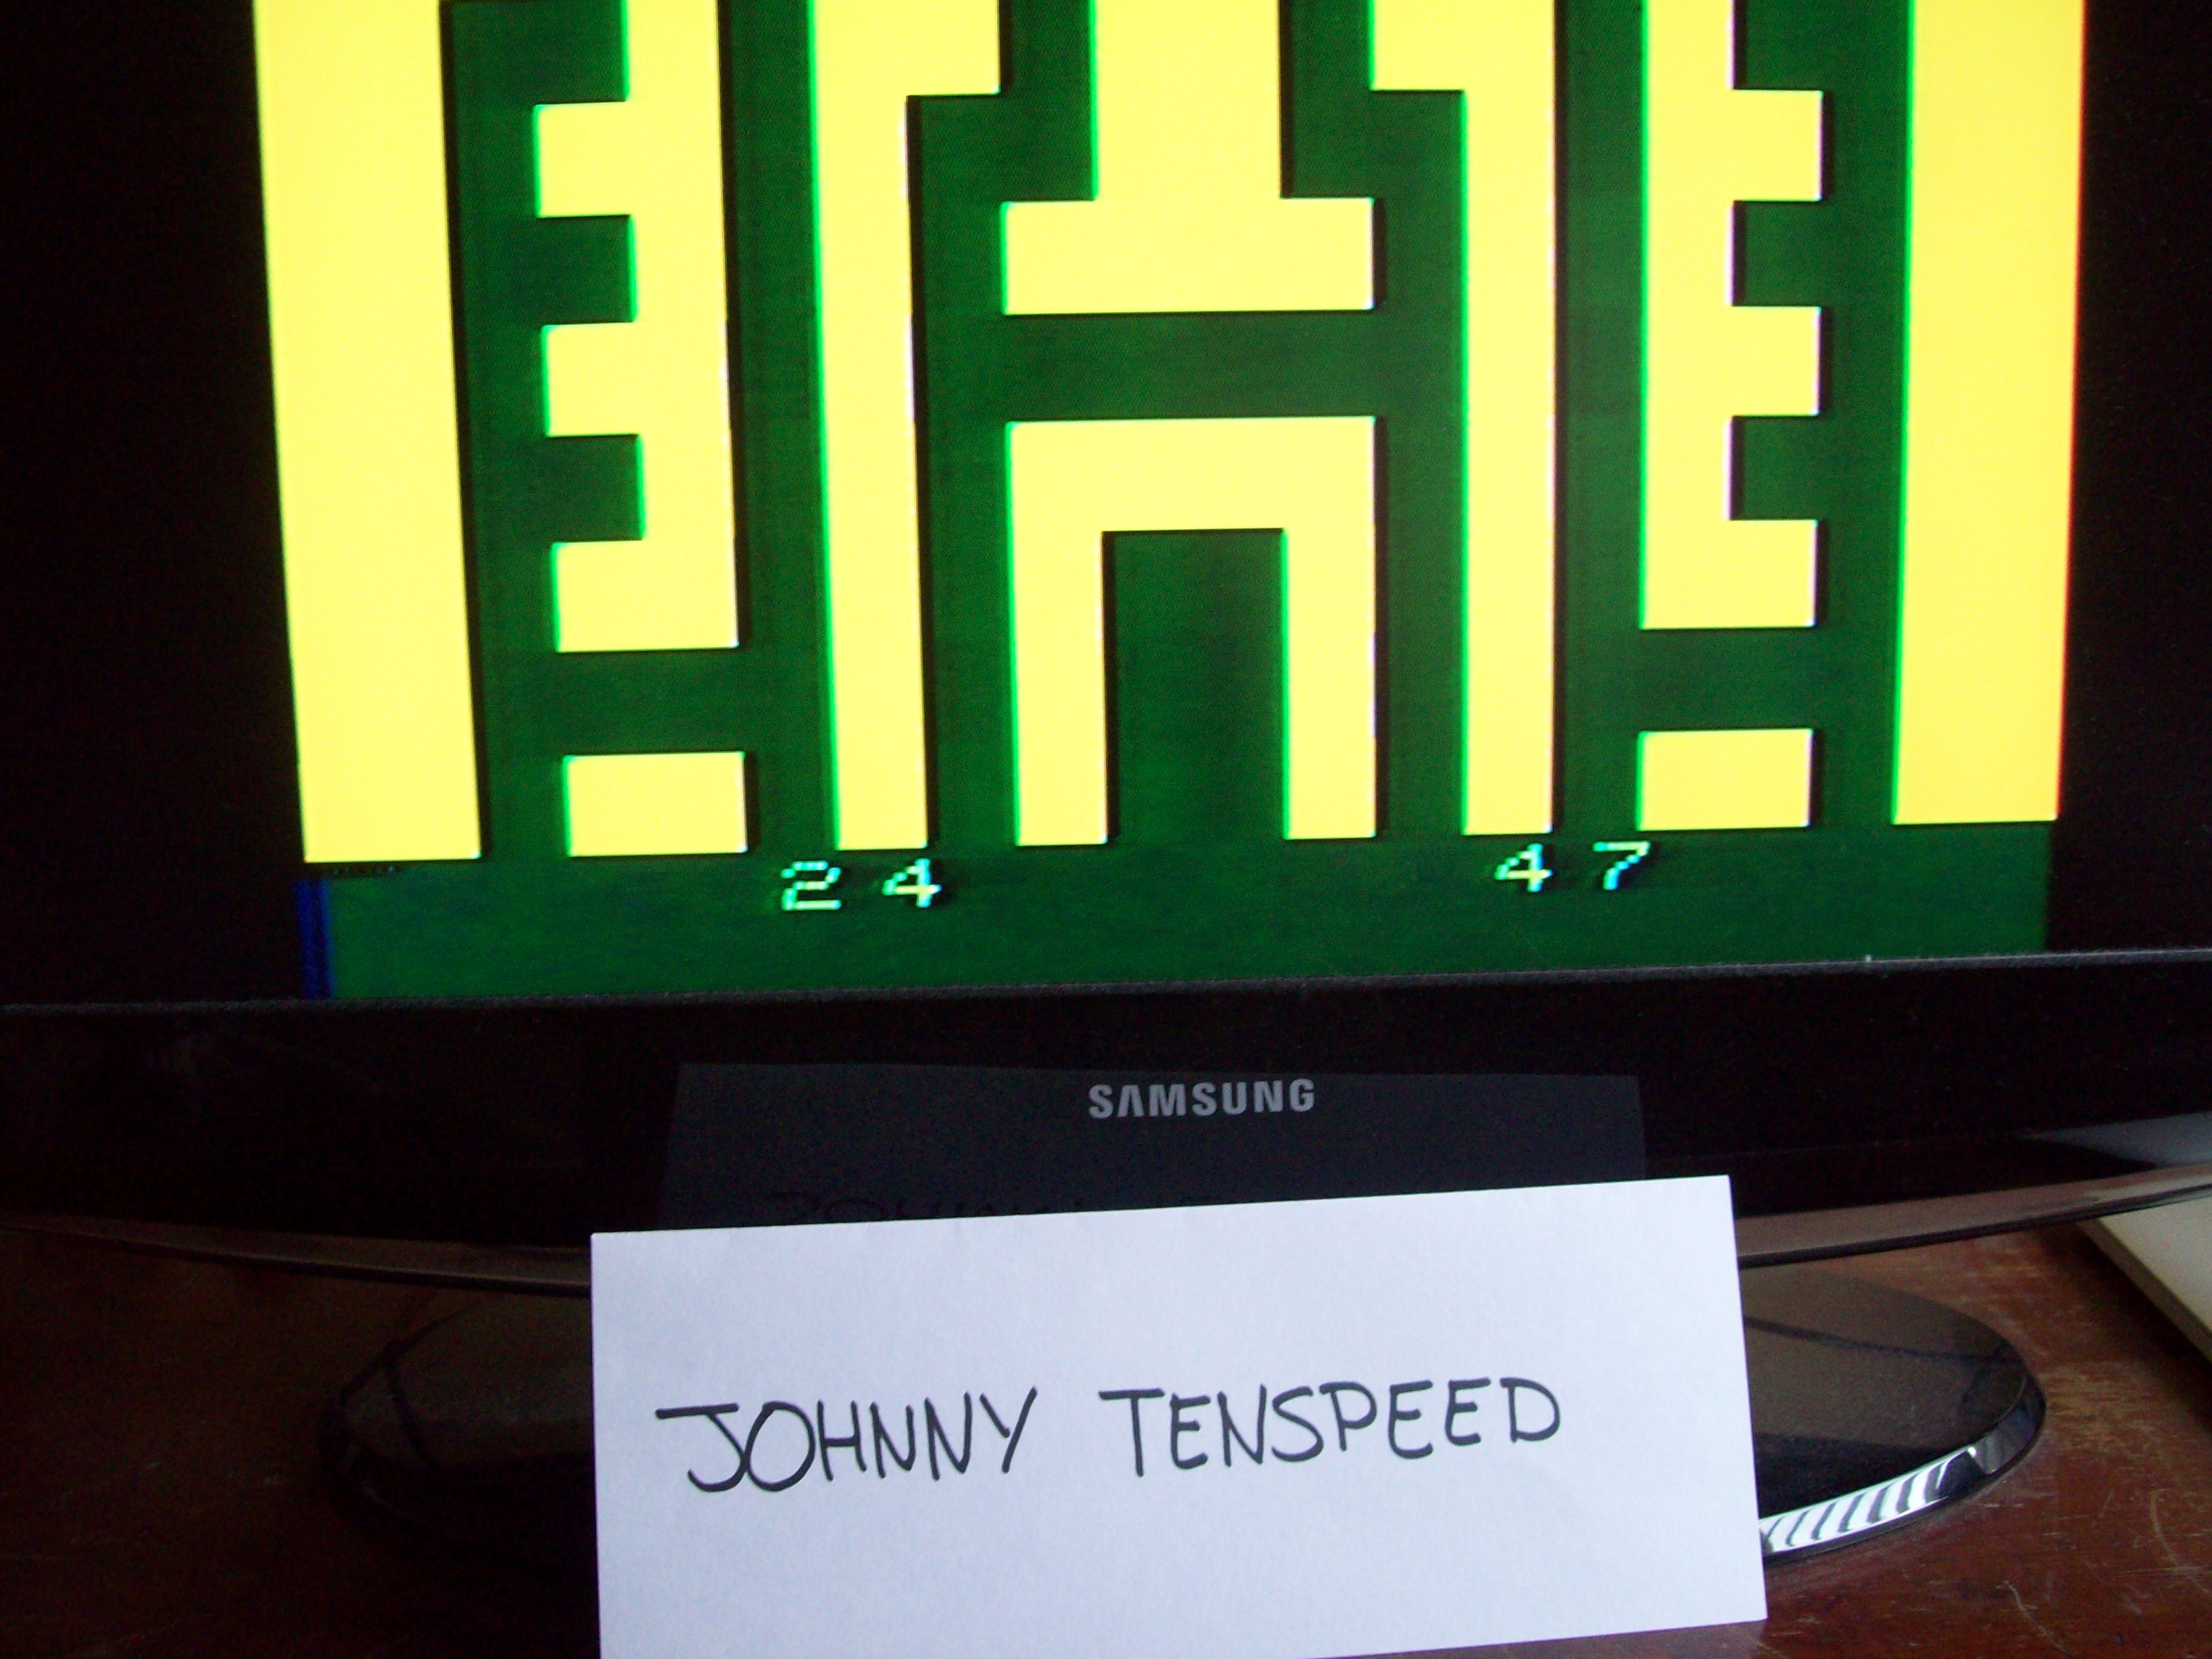 JohnnyTenspeed: Entombed (Atari 2600 Novice/B) 47 points on 2015-02-20 13:35:37